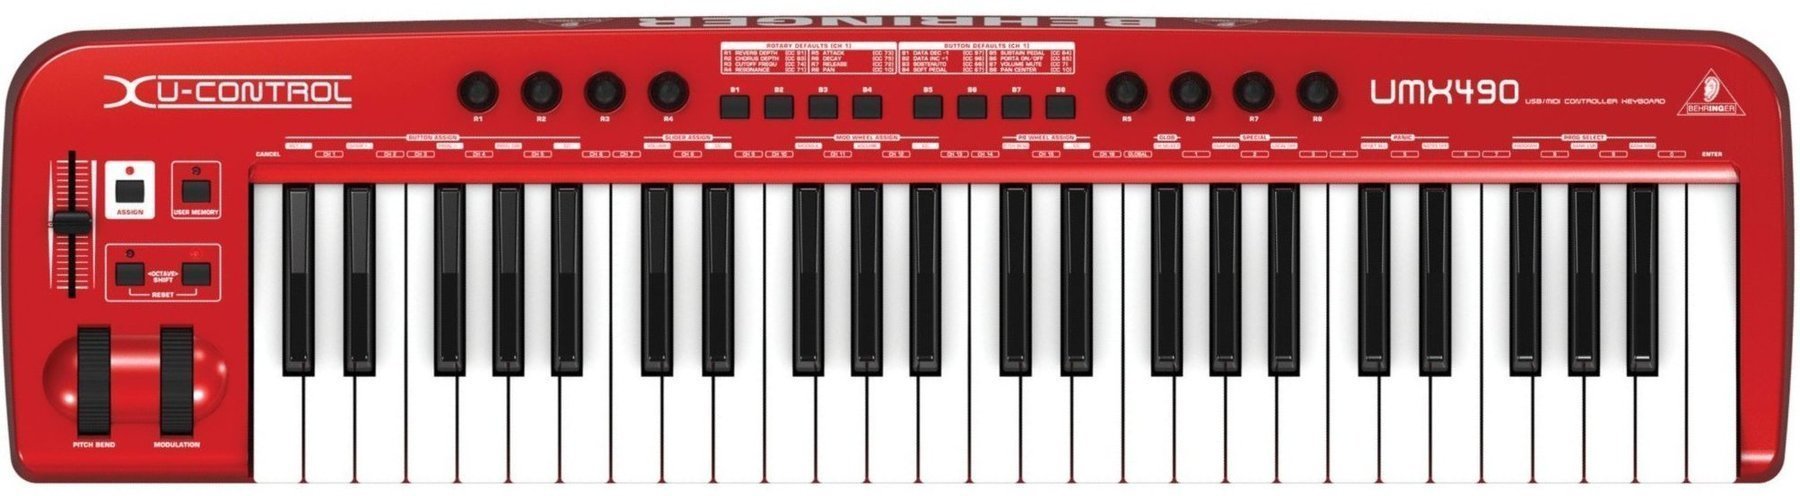 MIDI keyboard Behringer UMX 490 U-CONTROL